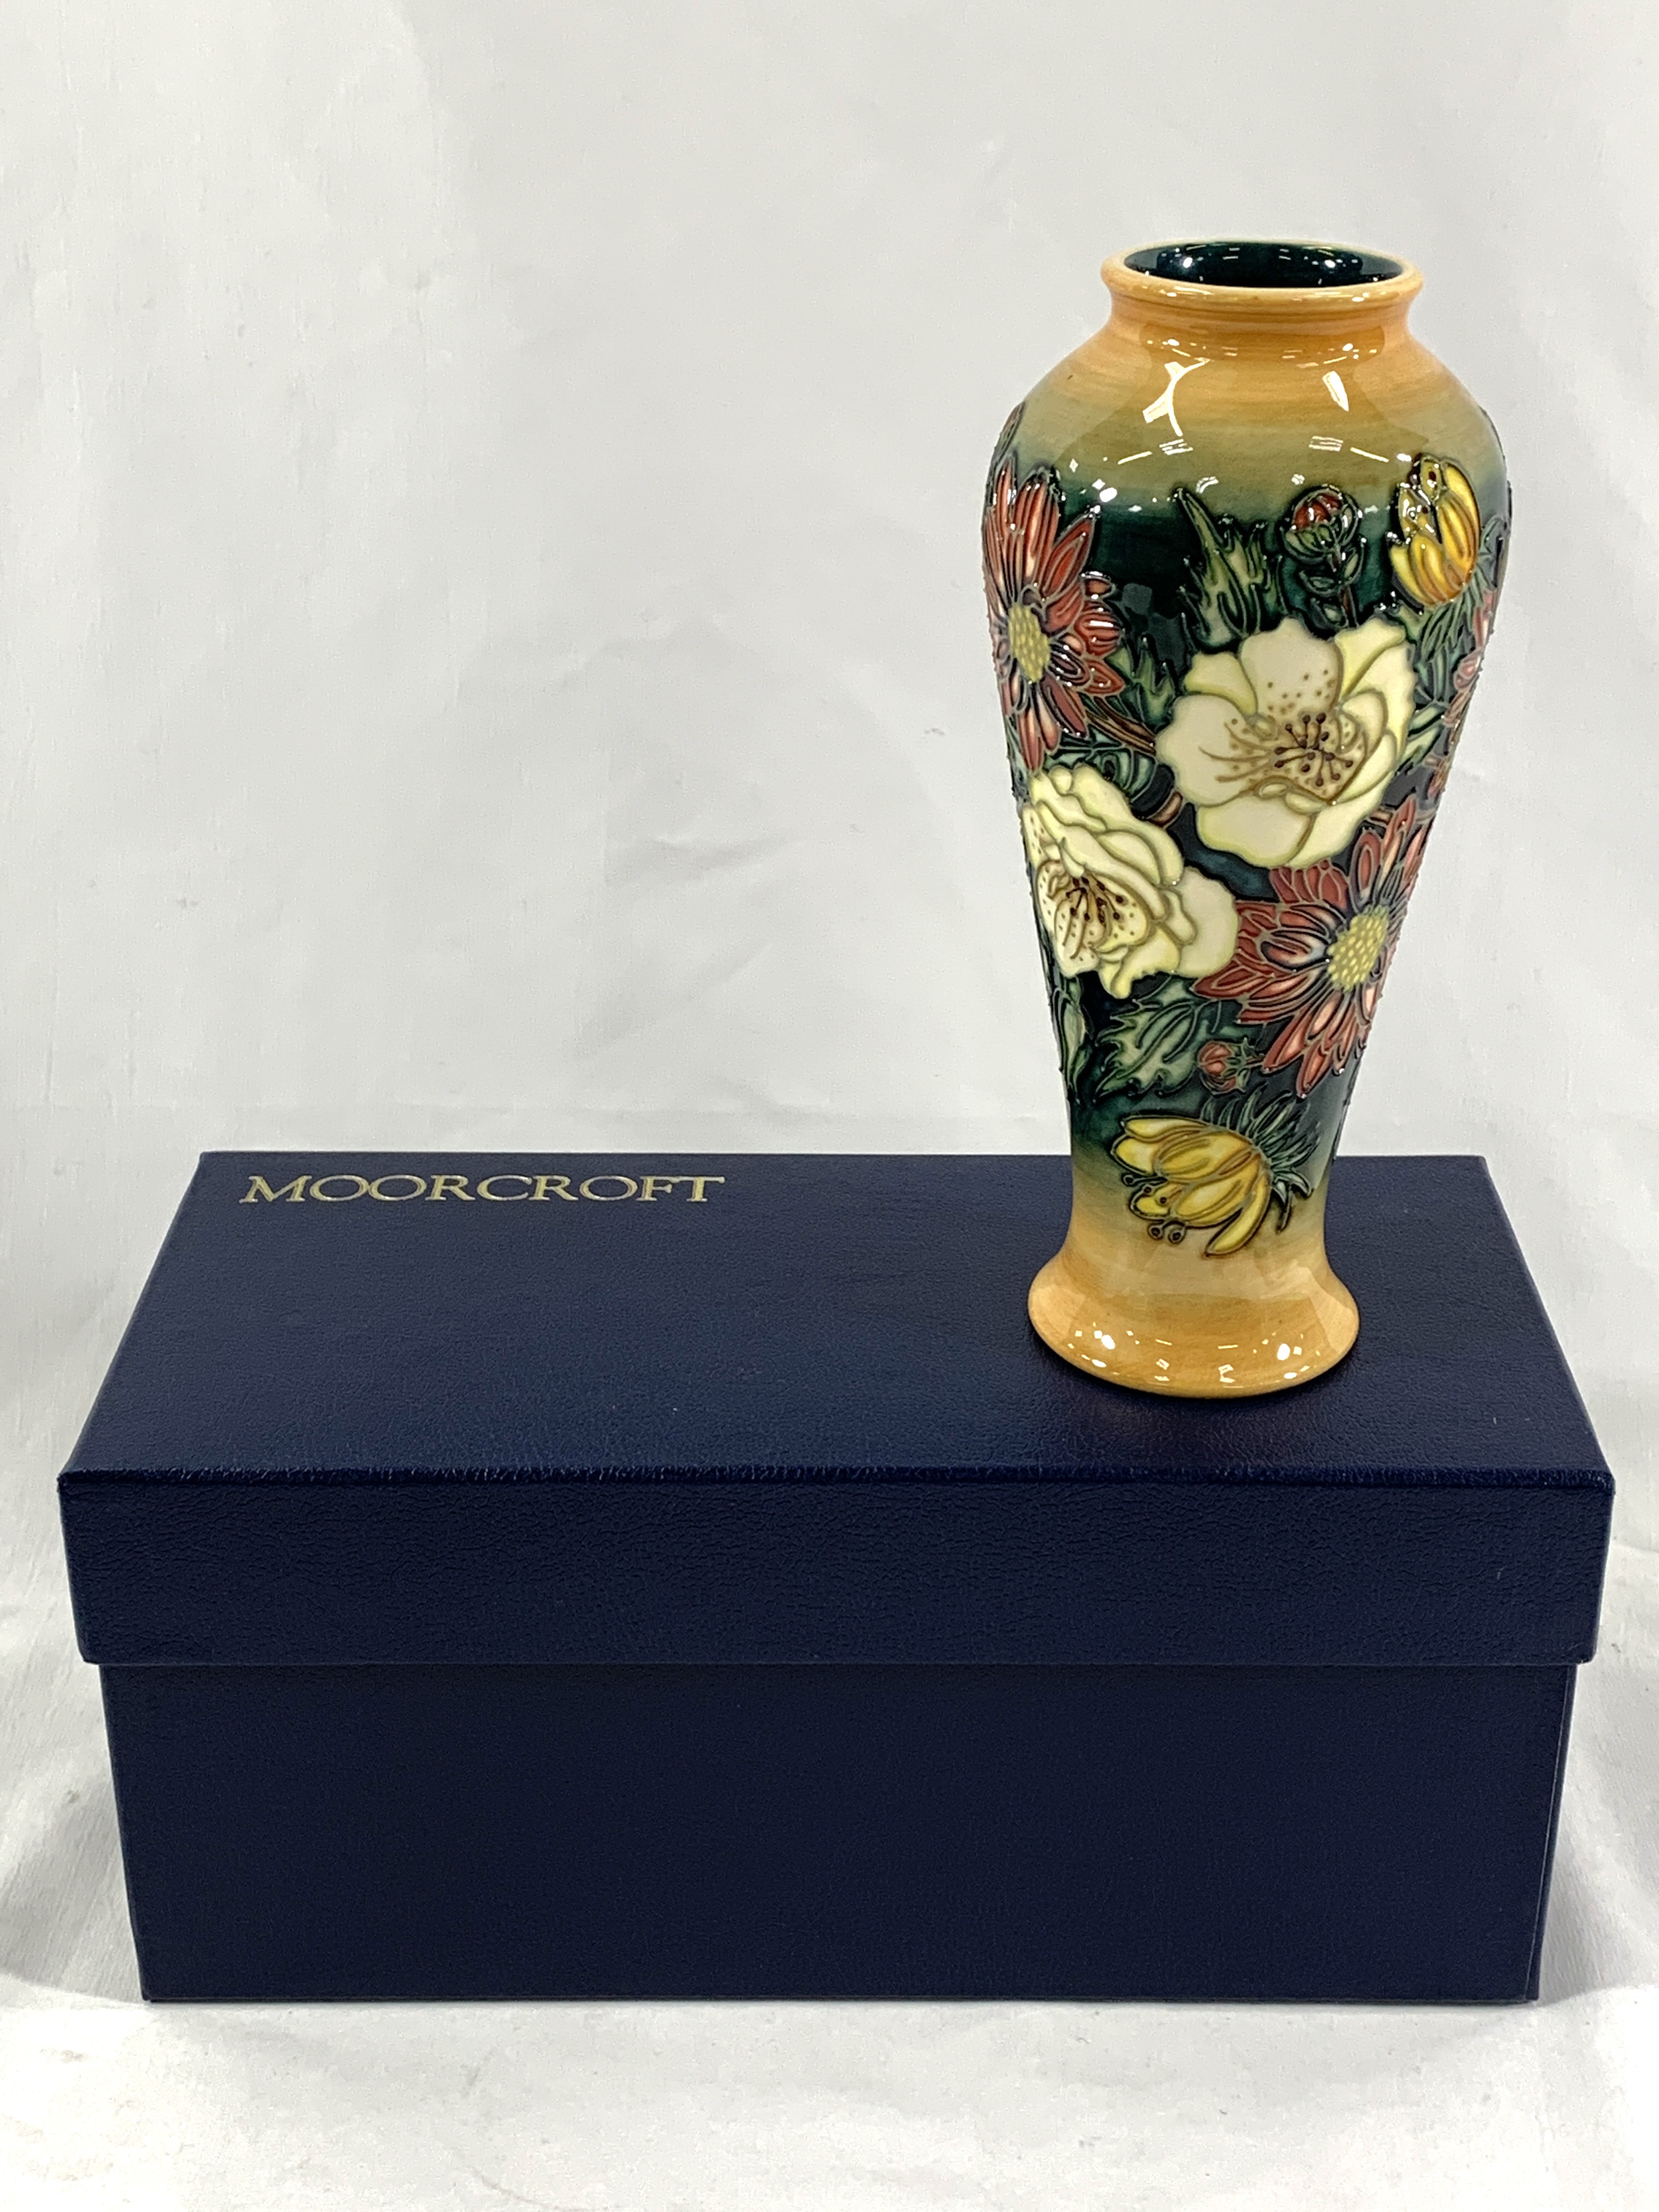 Boxed Moorcroft collectors club vase - Image 3 of 3